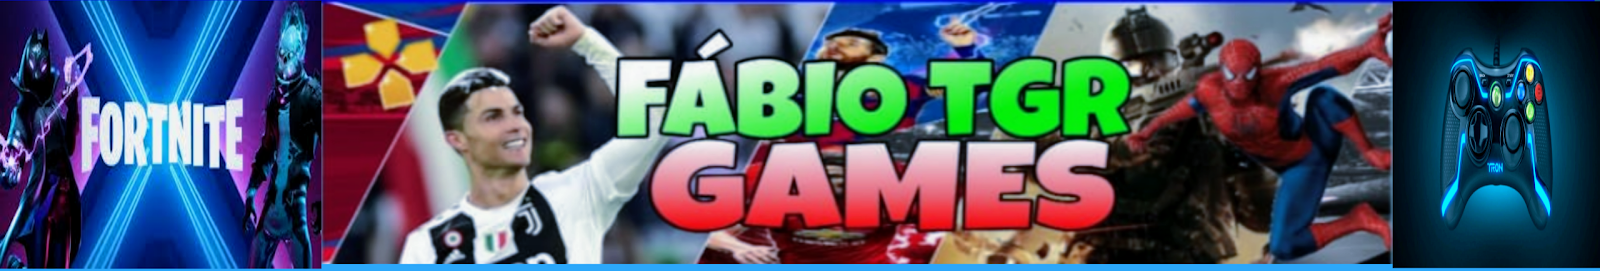 FÁBIO TGR GAMES